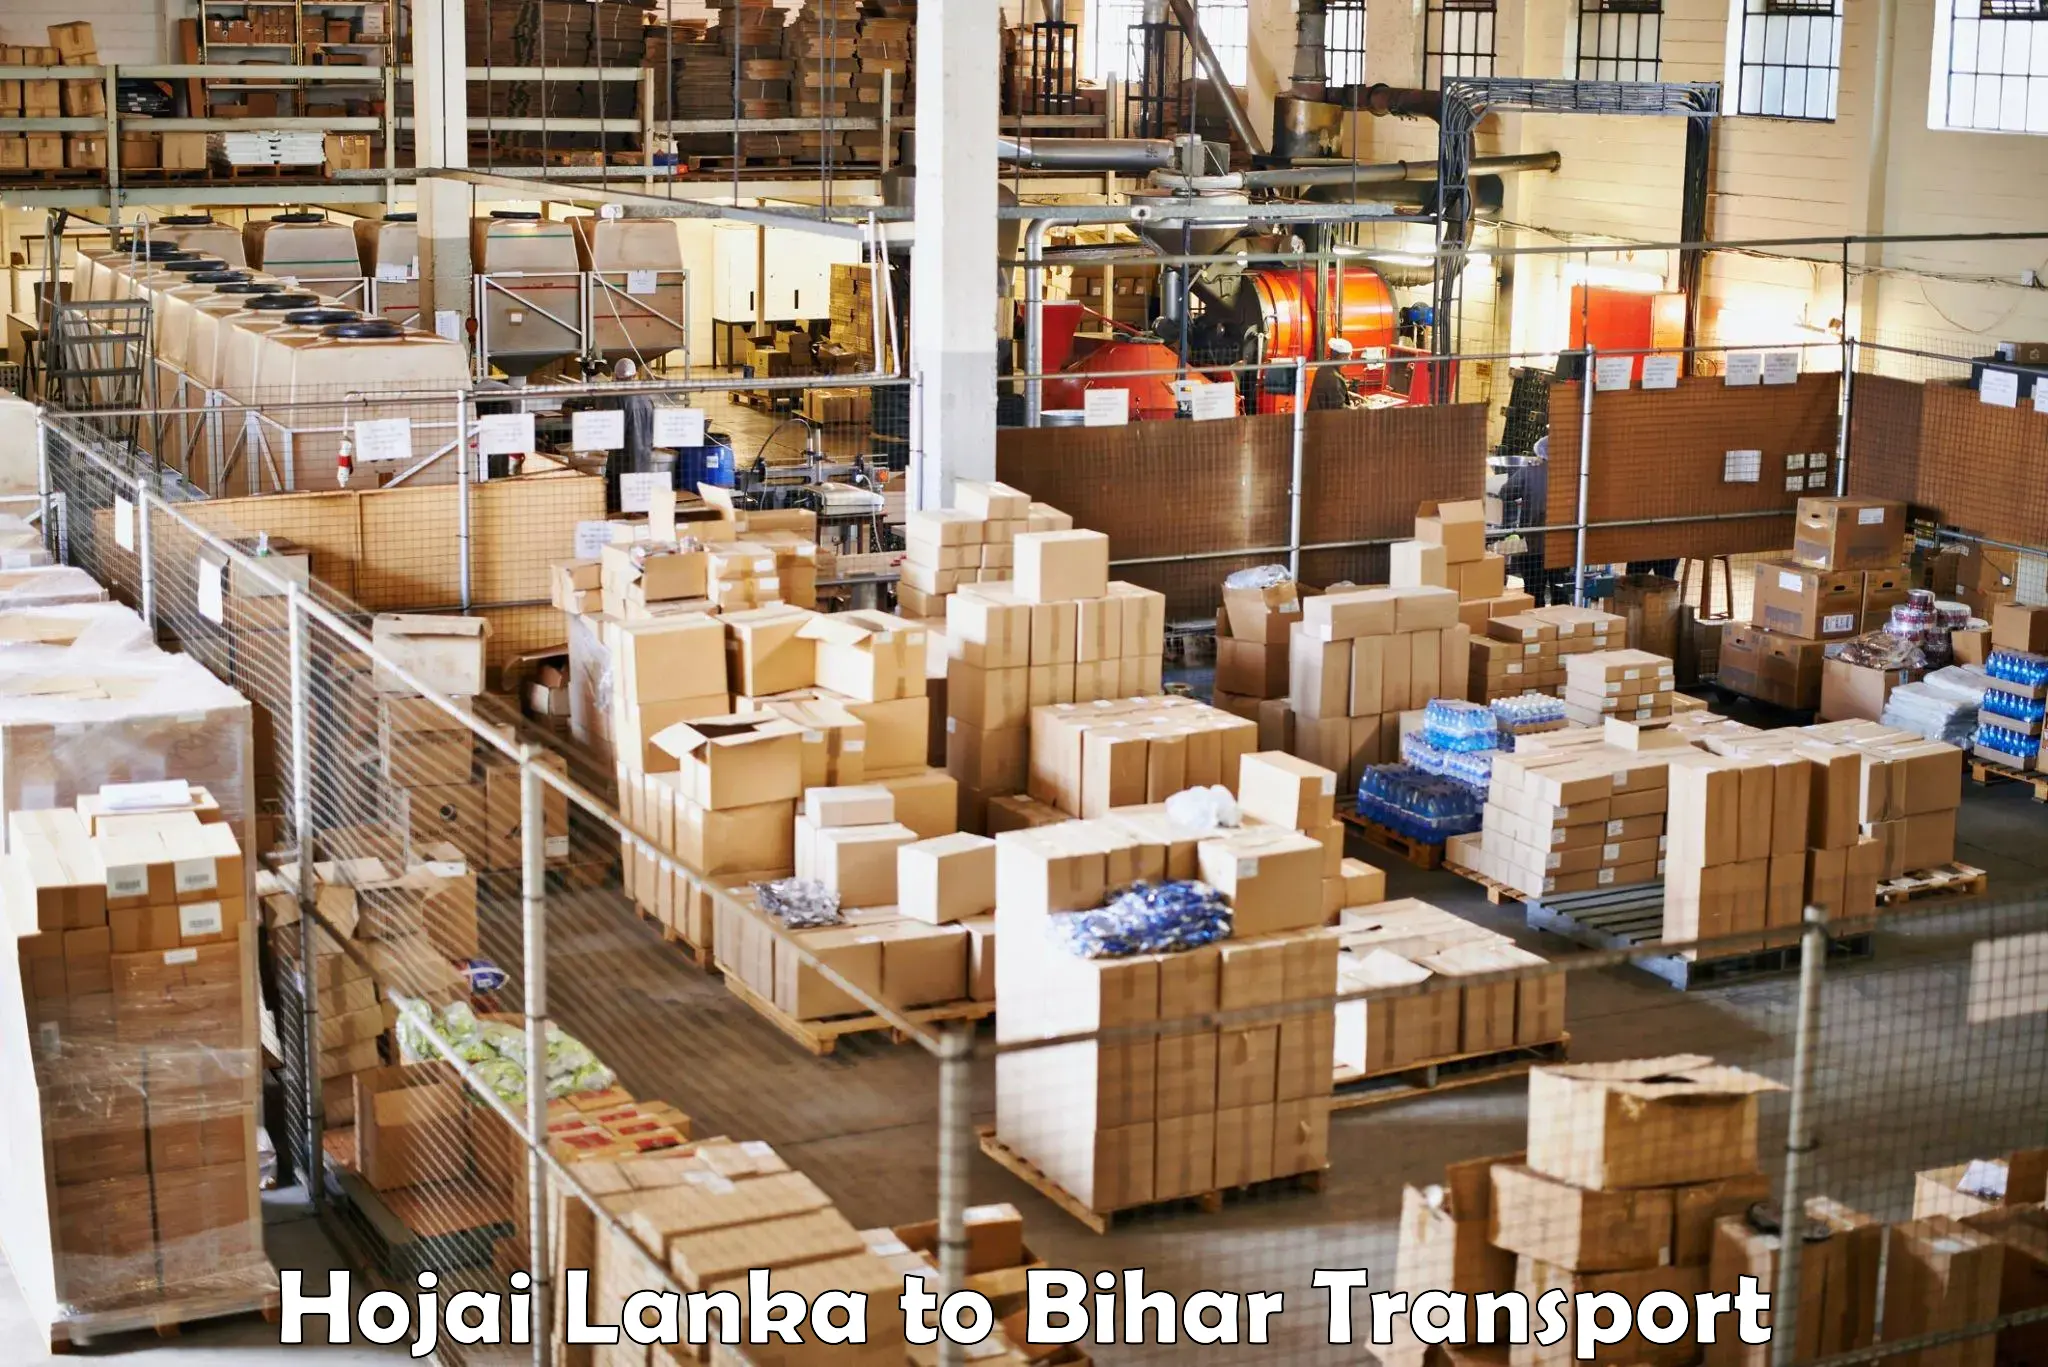 Container transport service Hojai Lanka to Kumarkhand